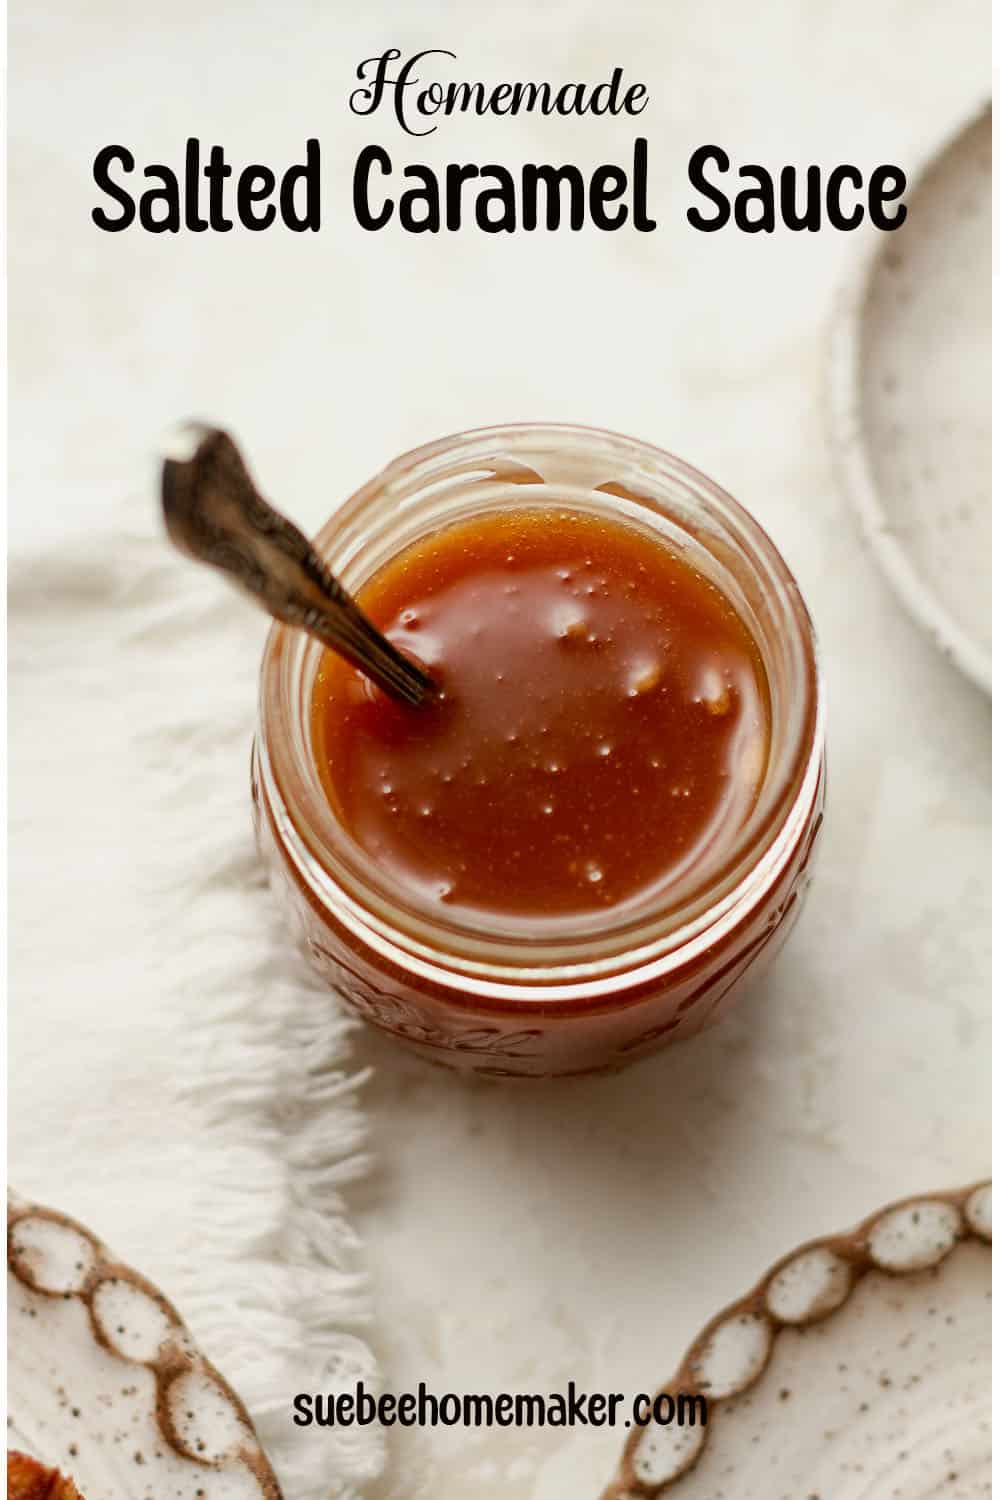 A jar of homemade caramel sauce with a spoon.